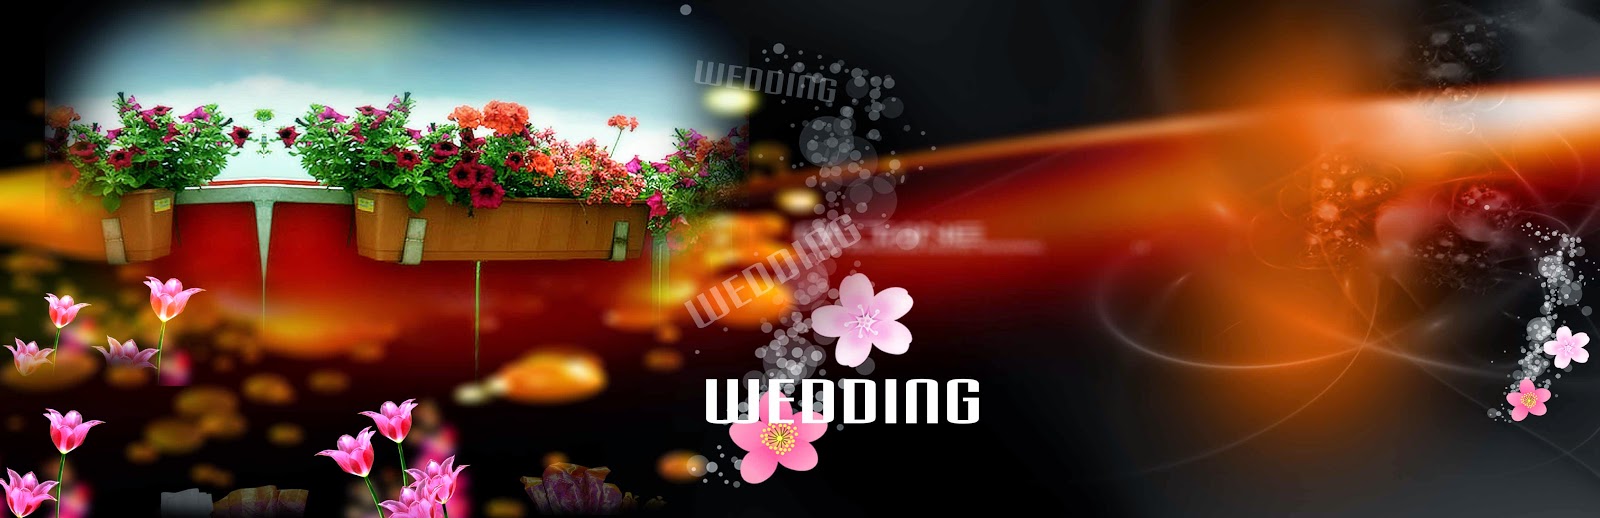 christian wedding album design psd free download